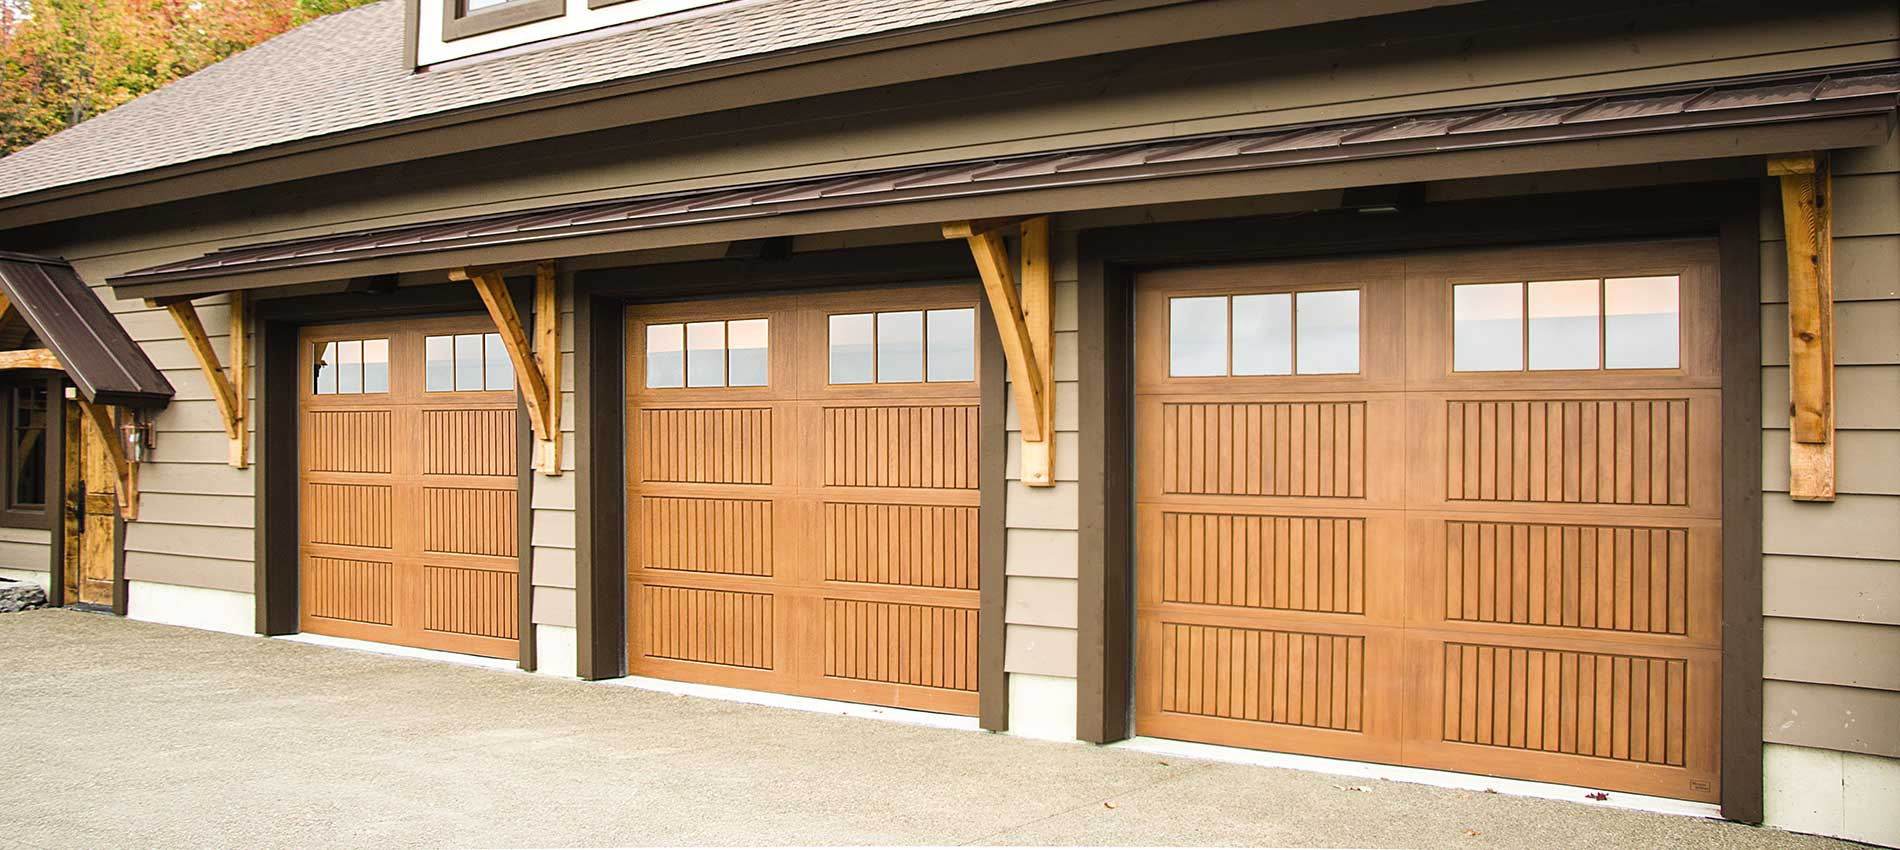 Wayne Dalton Garage Doors intended for measurements 1900 X 850